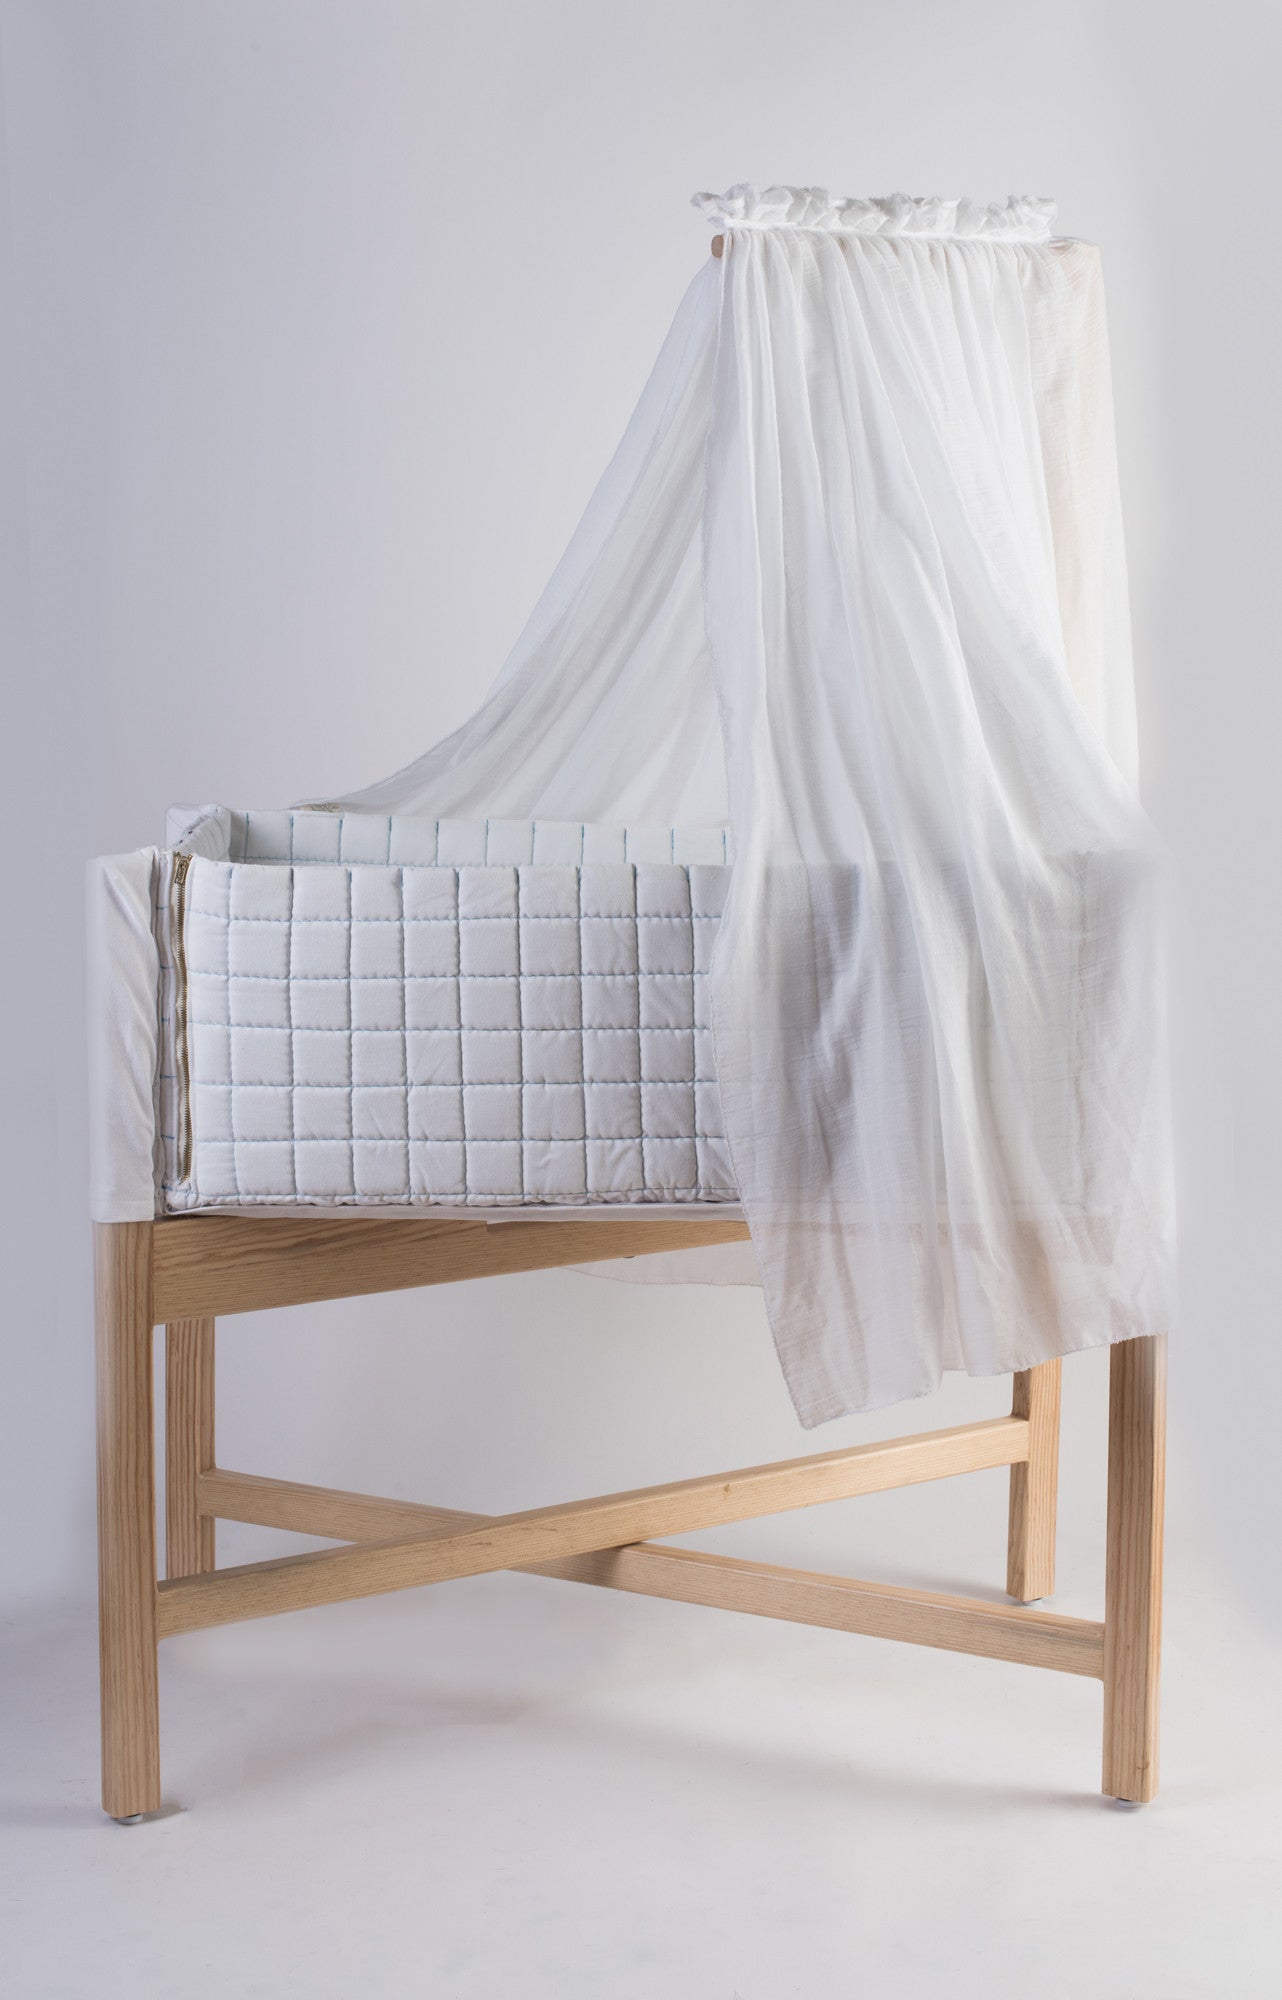 Mini Crib with Veil